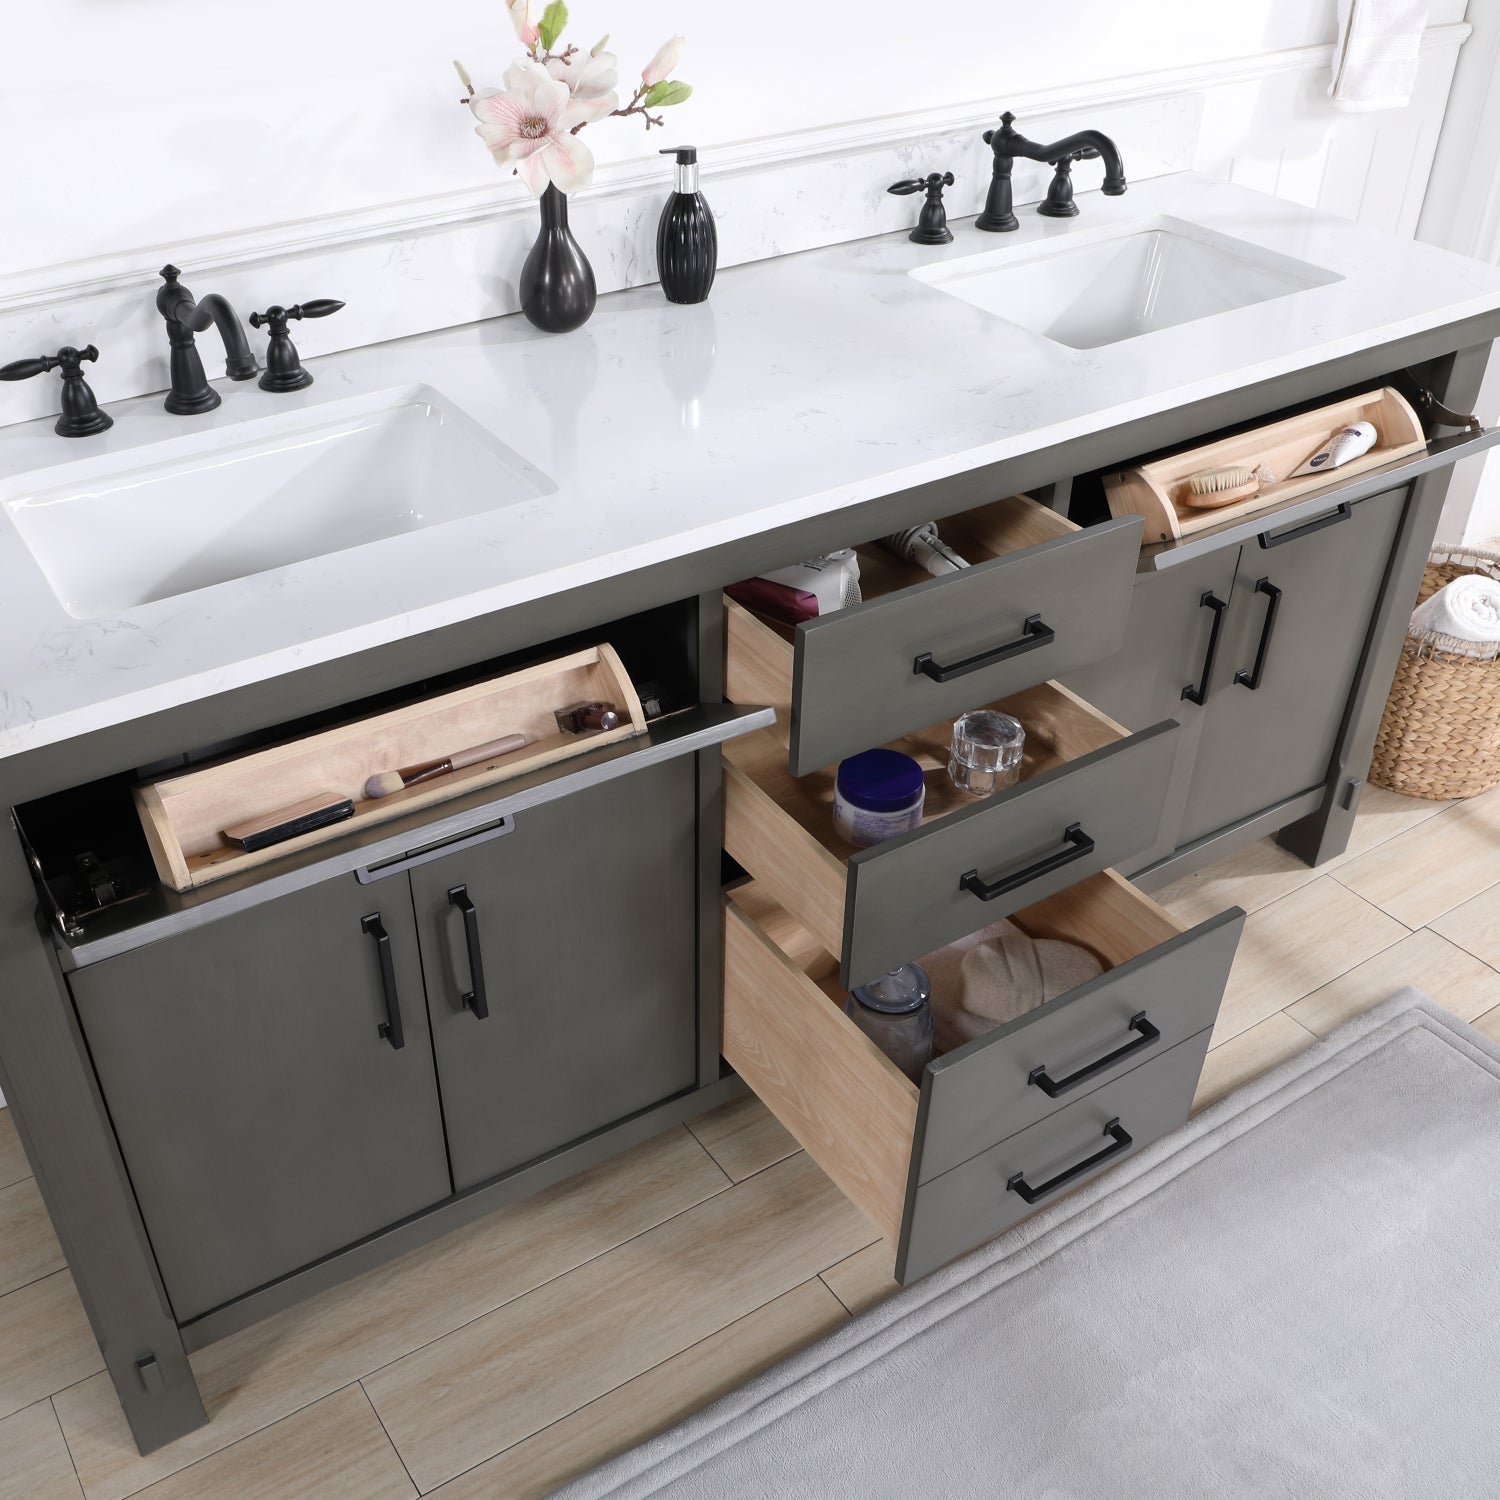 Vinnova Design Viella 72" Double Sink Bath Vanity in Rust Grey with White Composite Countertop - New Star Living